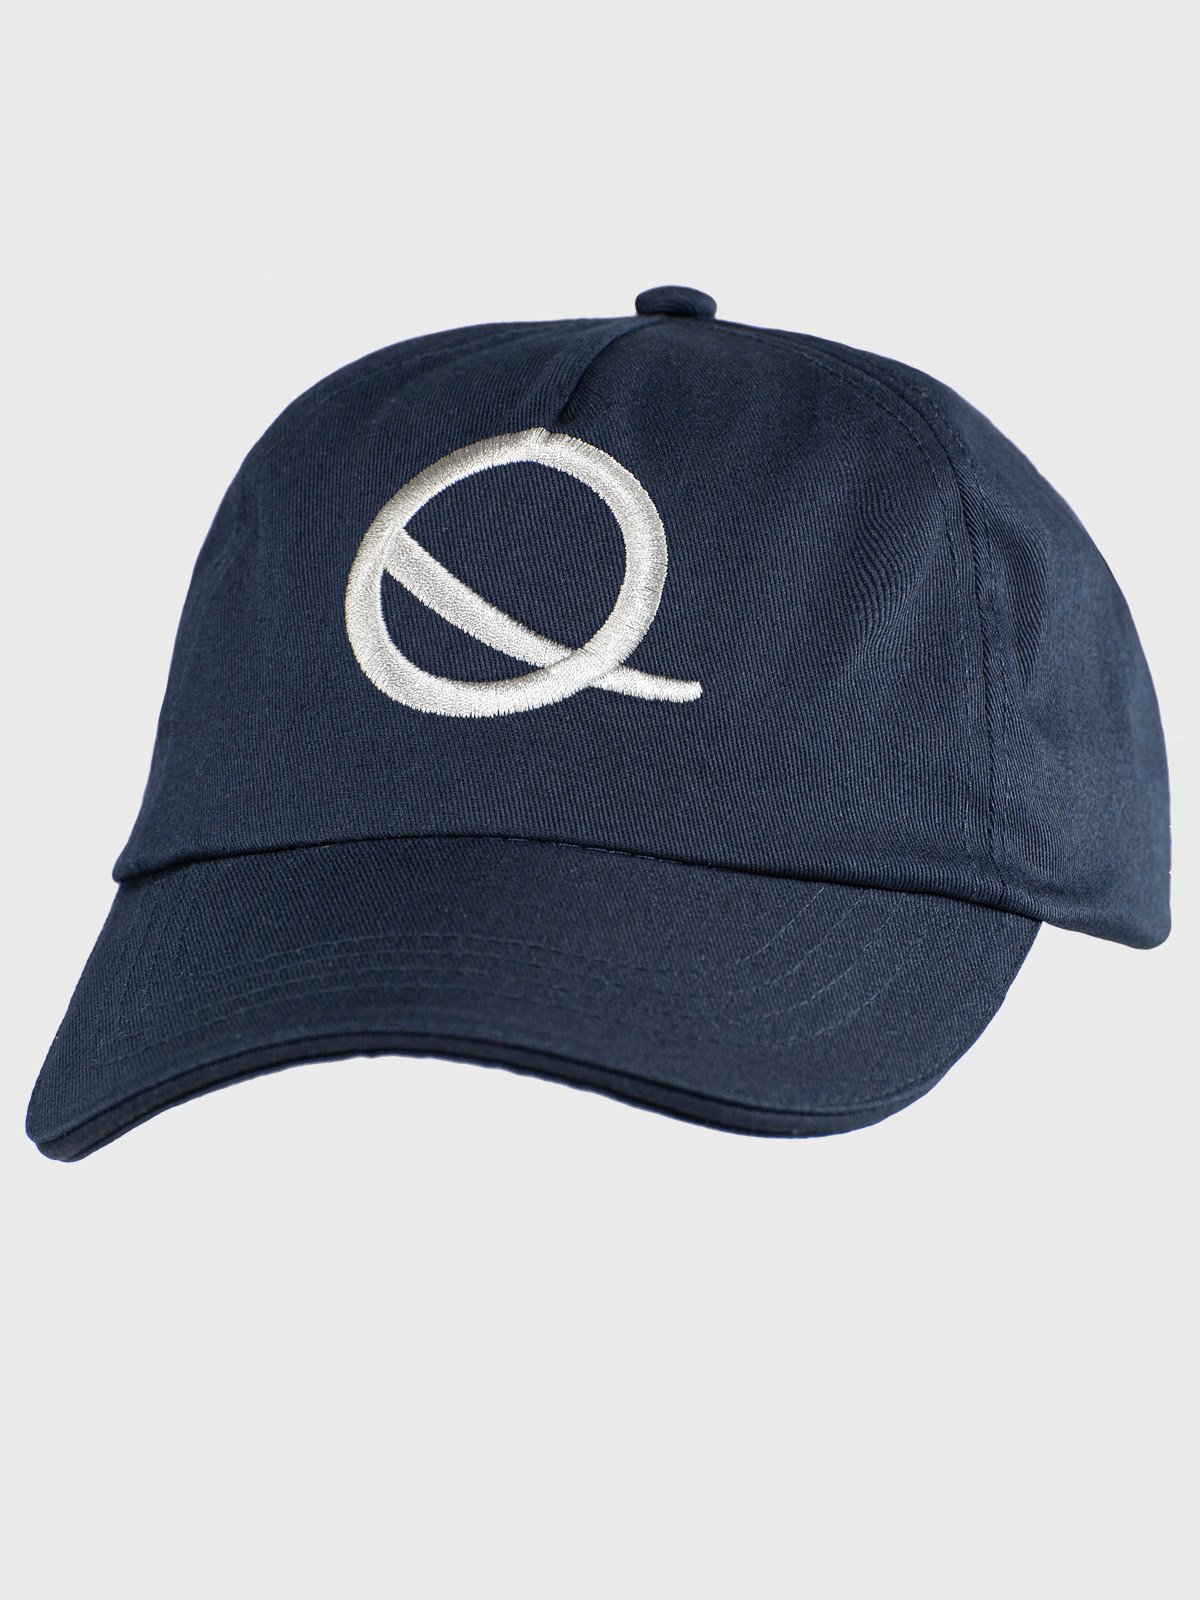 EQODE BASEBALL CAP WITH Q LOGO 1